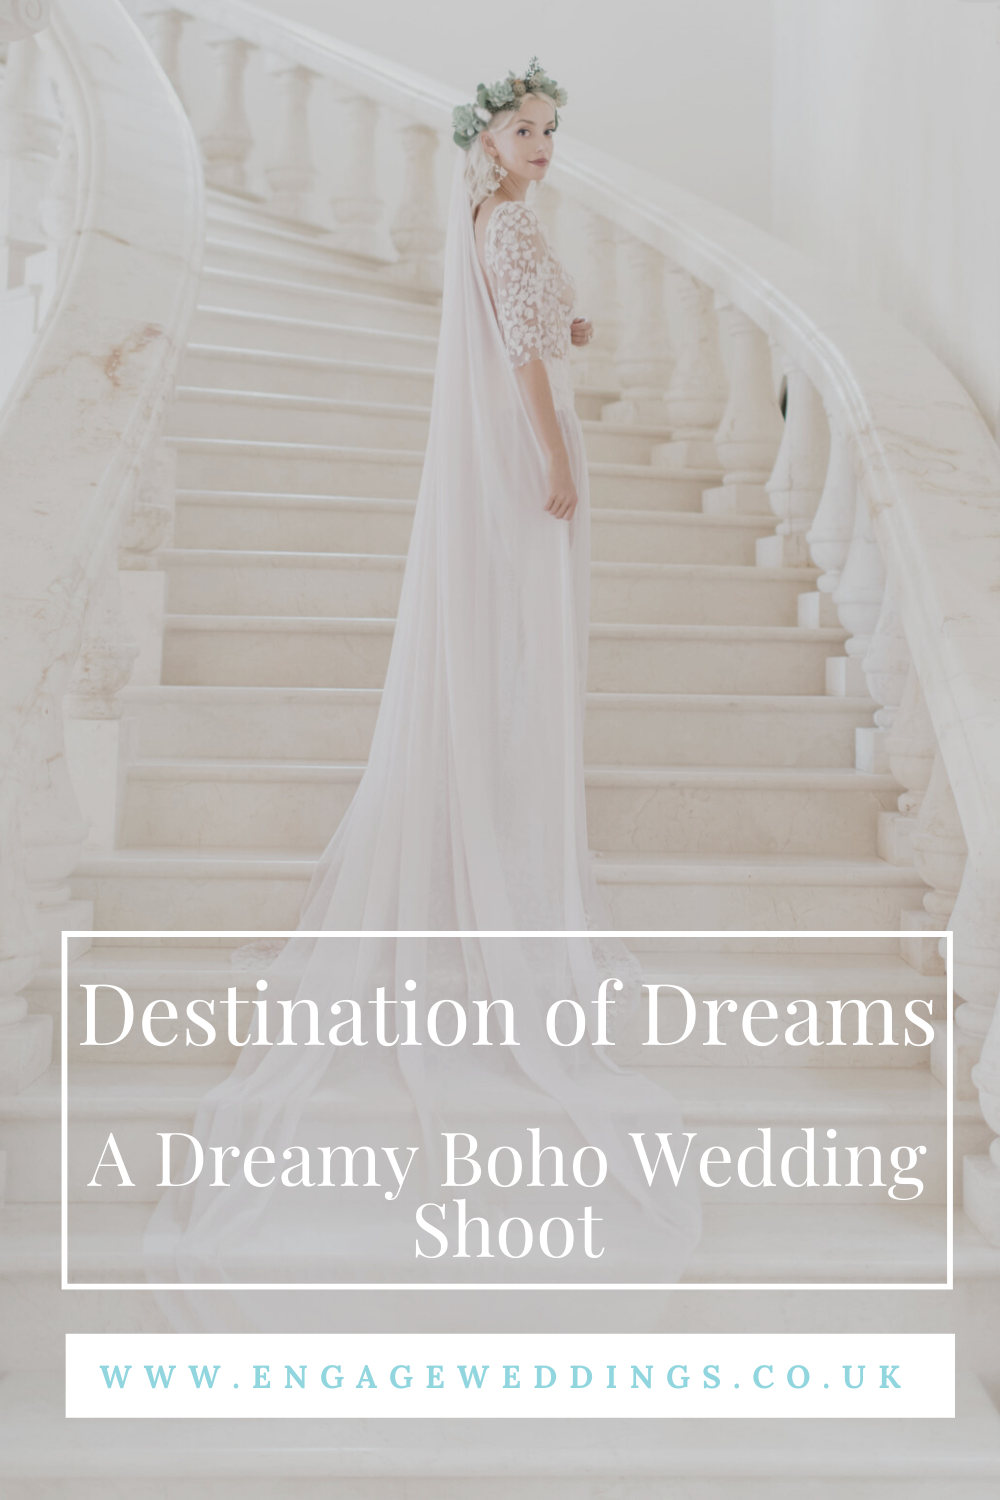 Destination of Dreams, A Dreamy Boho Wedding Shoot_engageweddings.co.uk.png